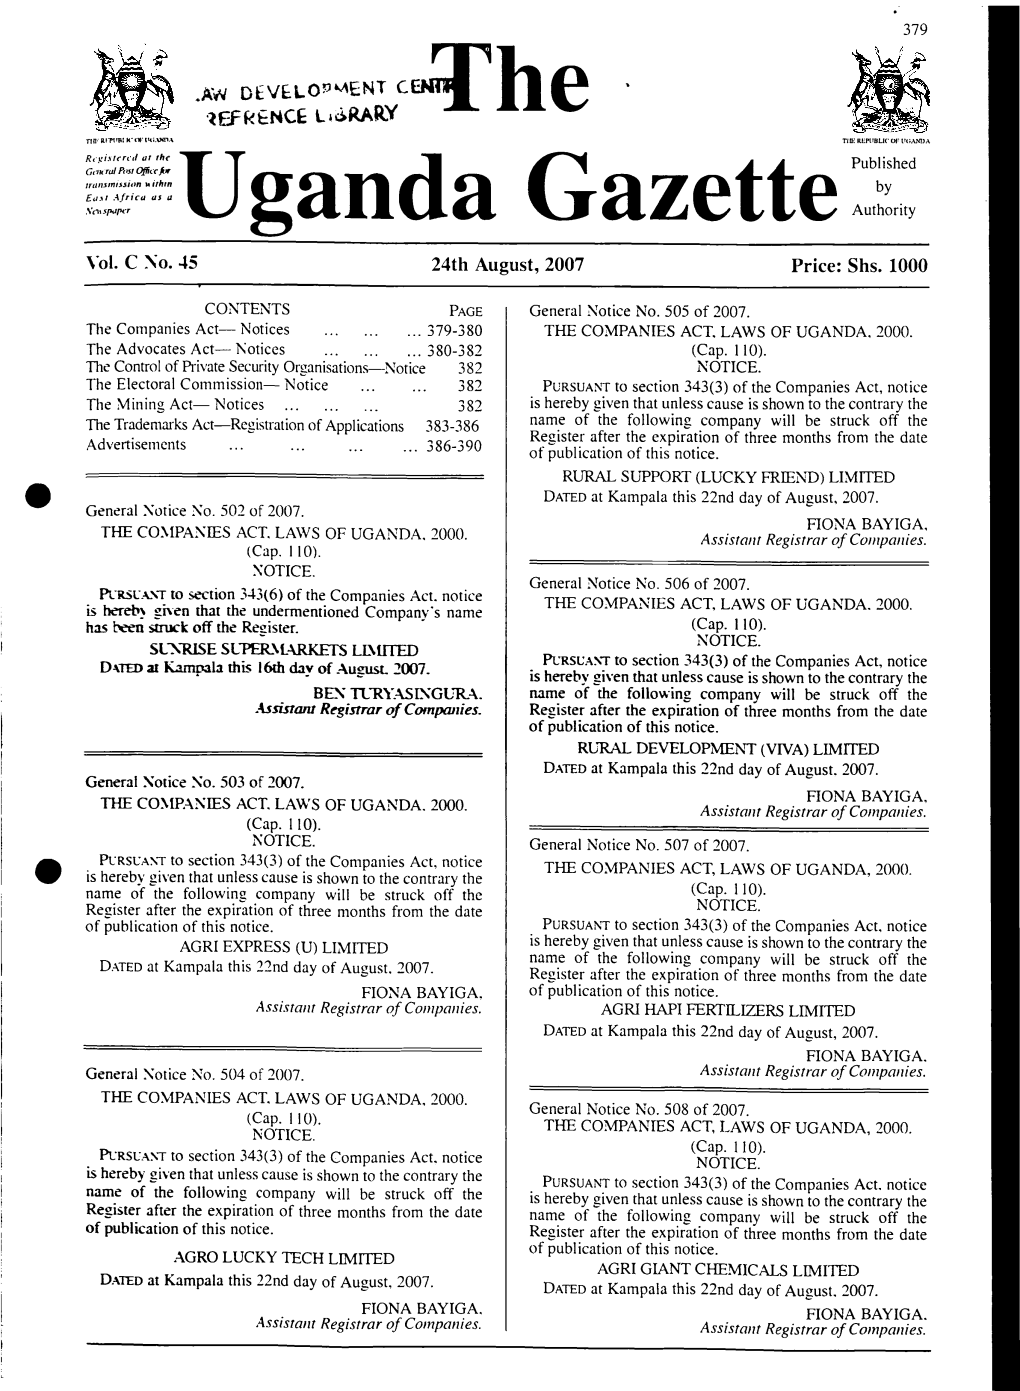 Uganda Gazette X